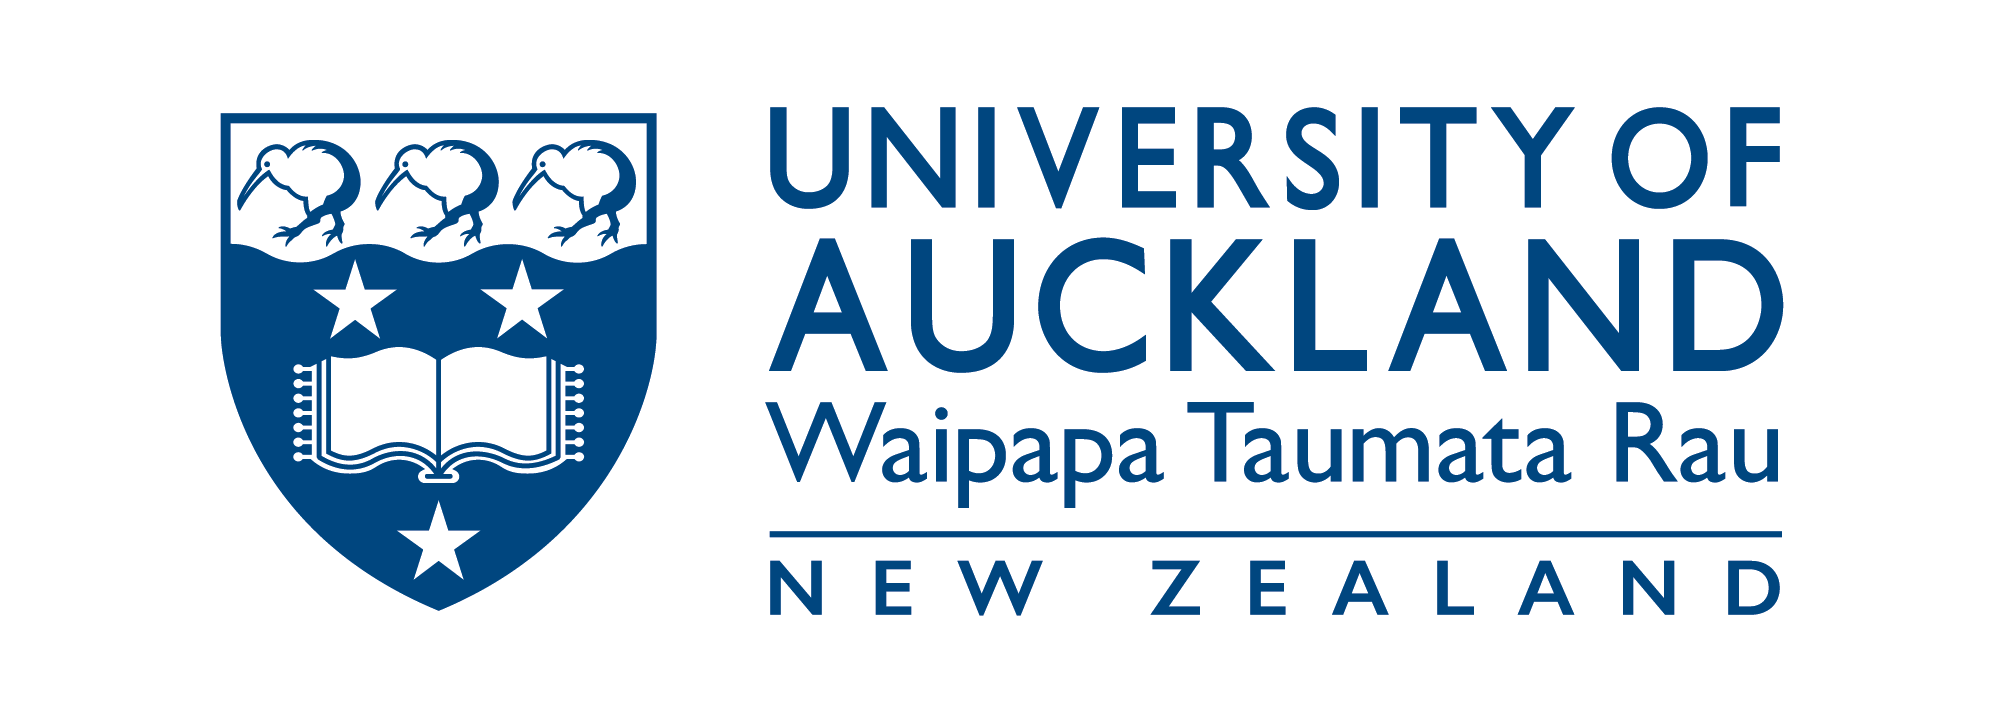 University of Auckland, Waipapa Taumata Rau